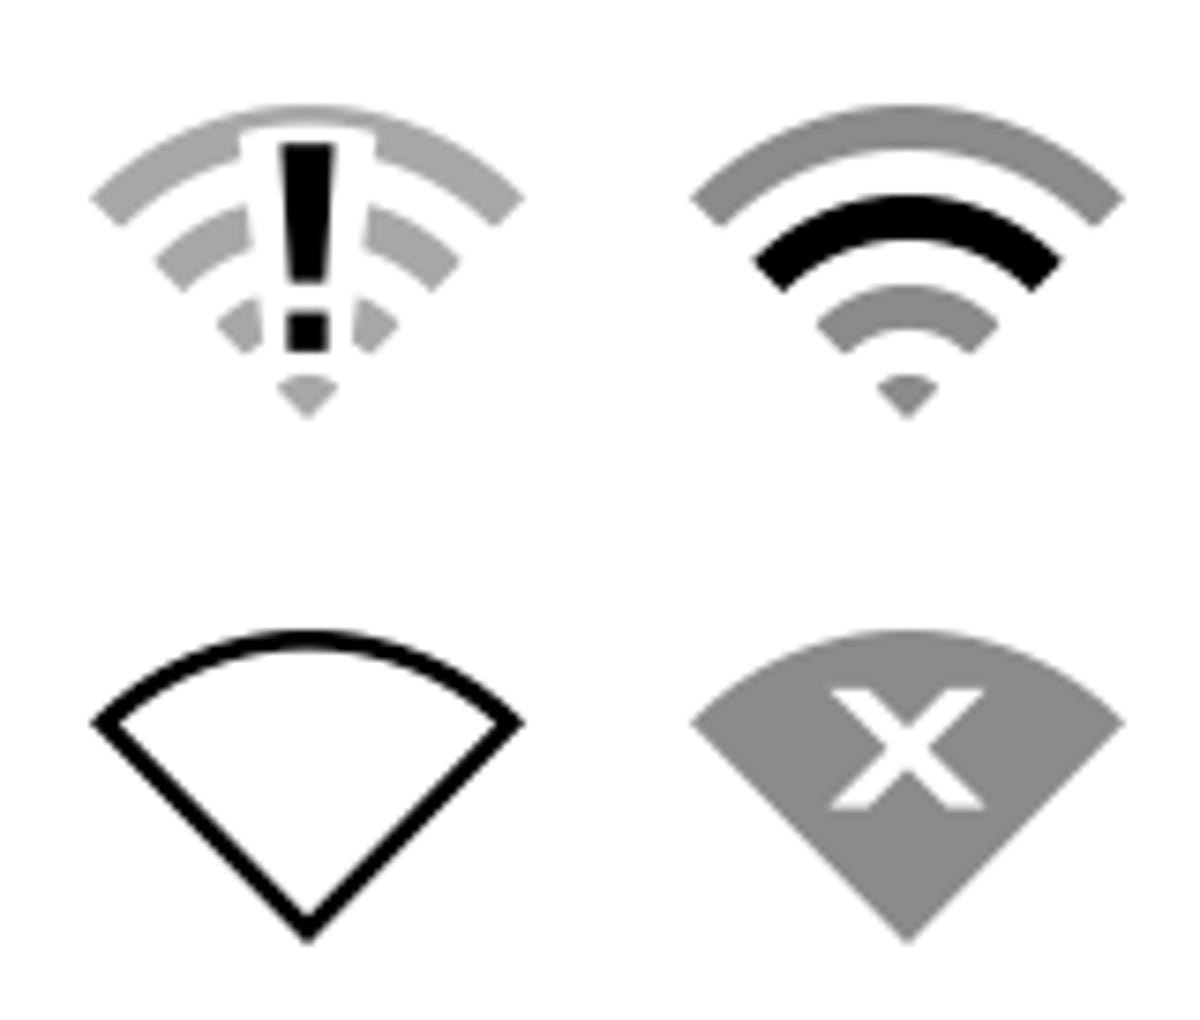 Wi-Fi error icons